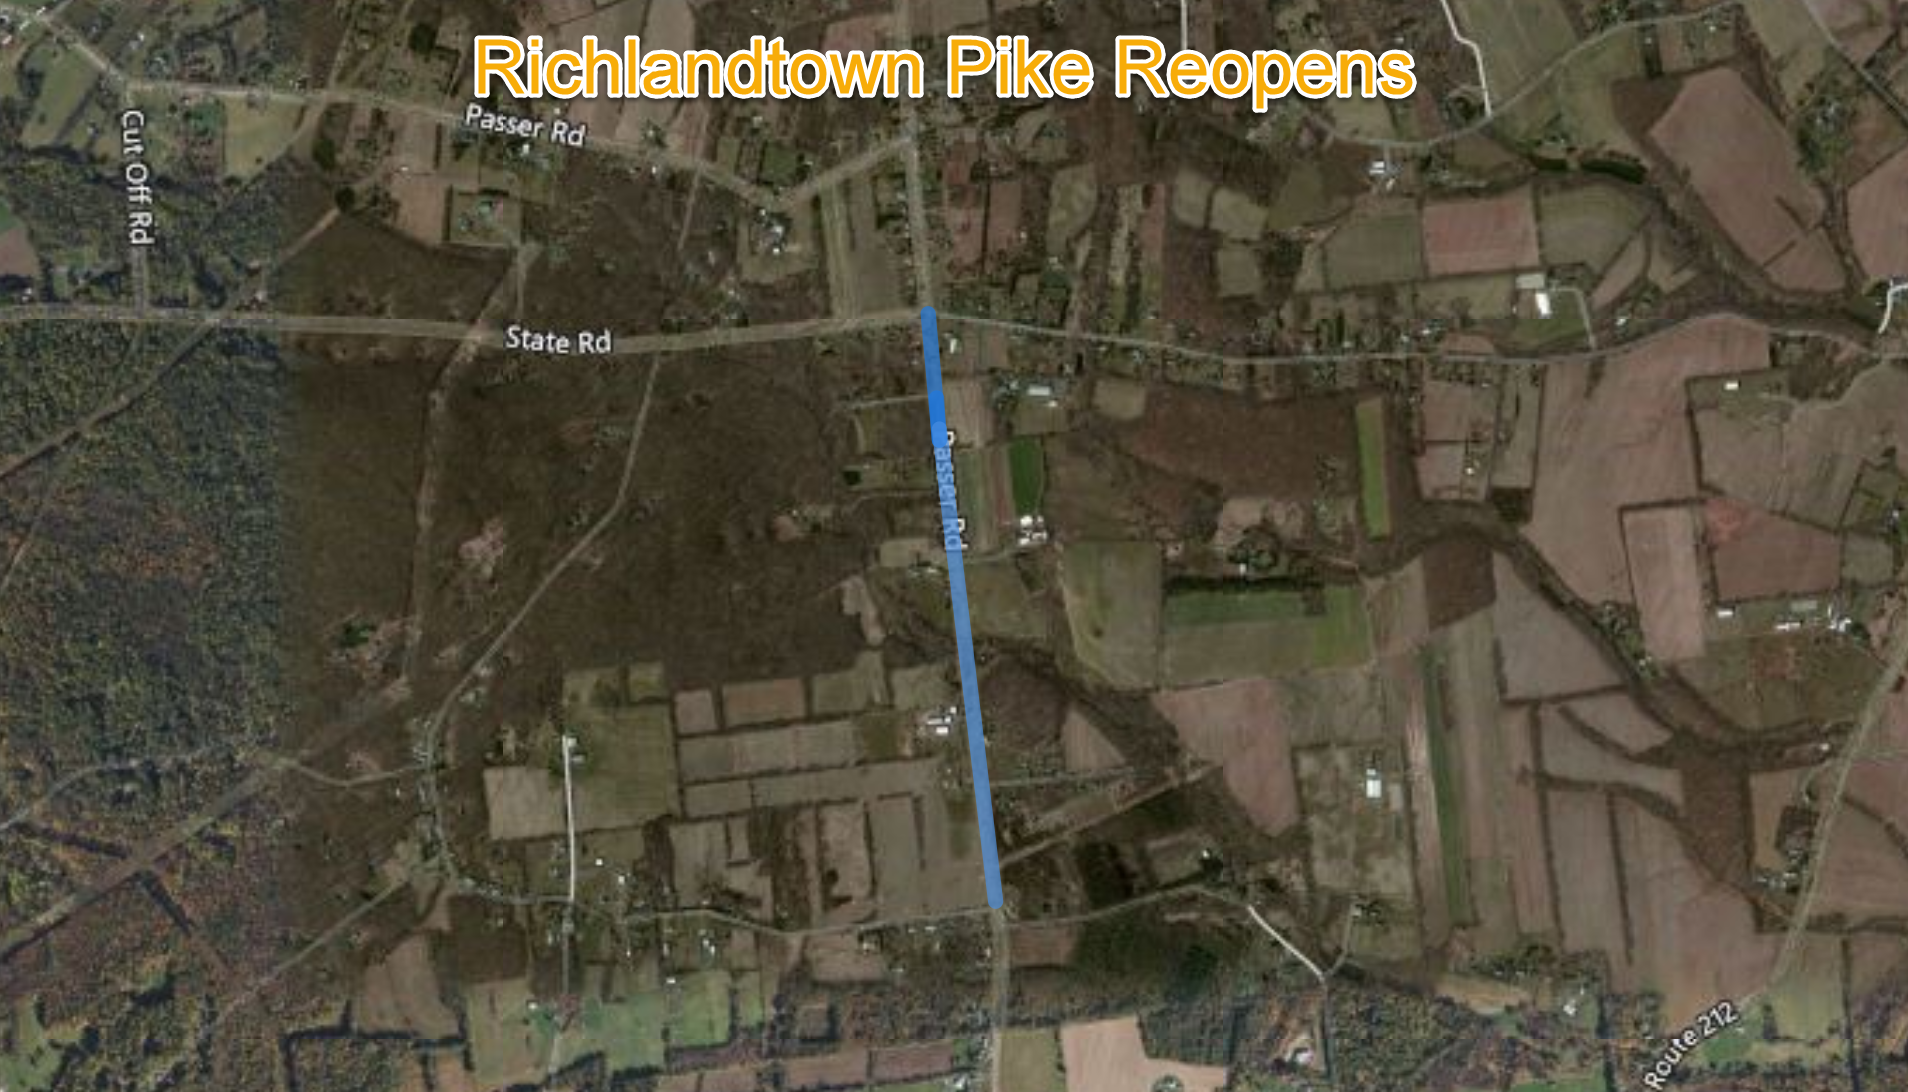 Richlandtown Pike, 9-3.PNG